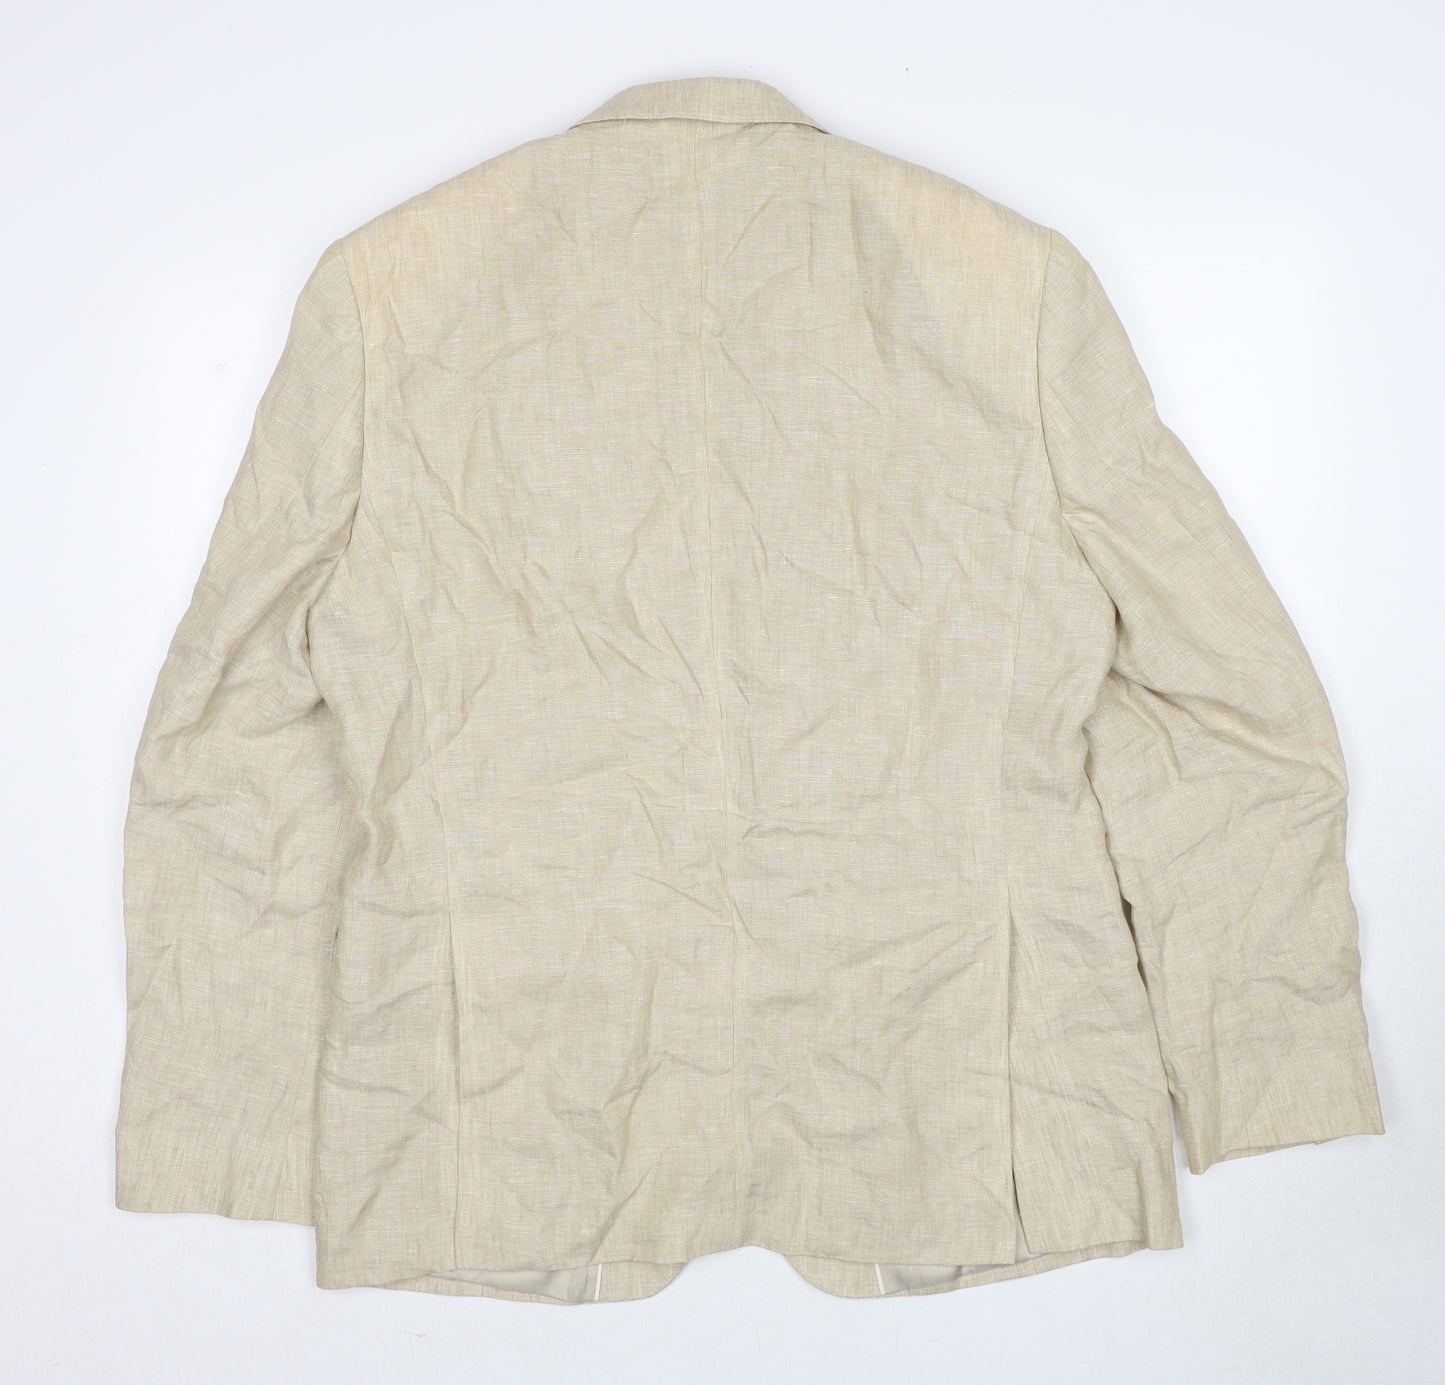 John Lewis Mens Beige Linen Jacket Blazer Size 42 Regular